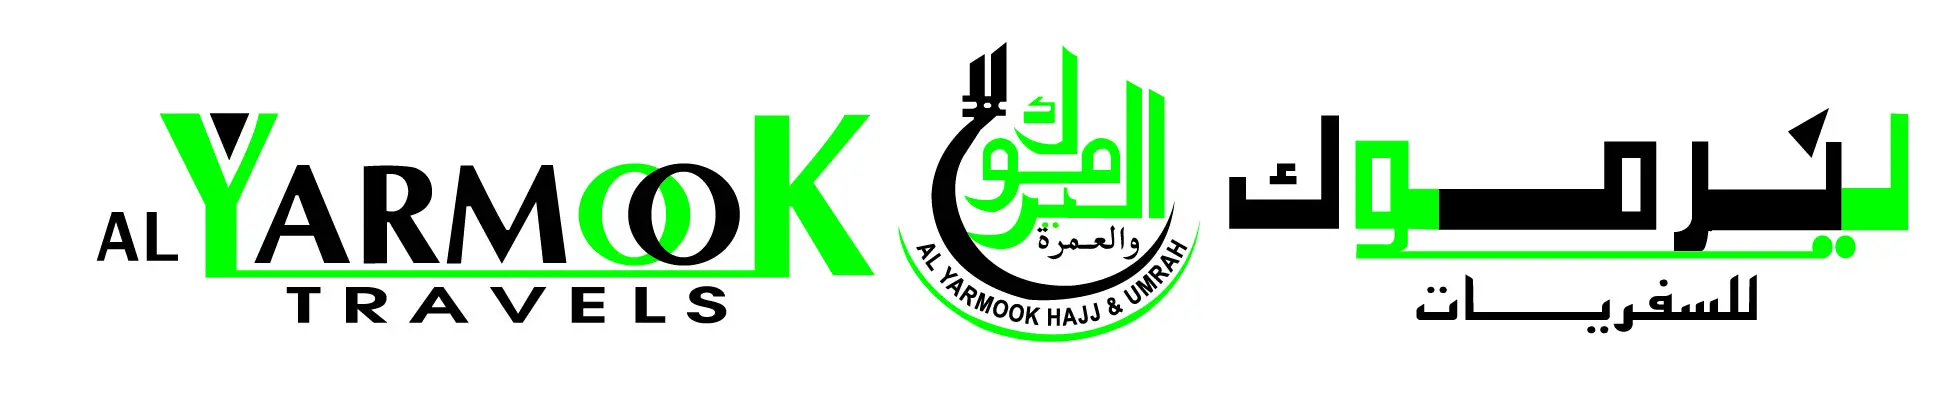 52a5f443-f62f-4ec4-a12a-d141556a604a_yarmook logo